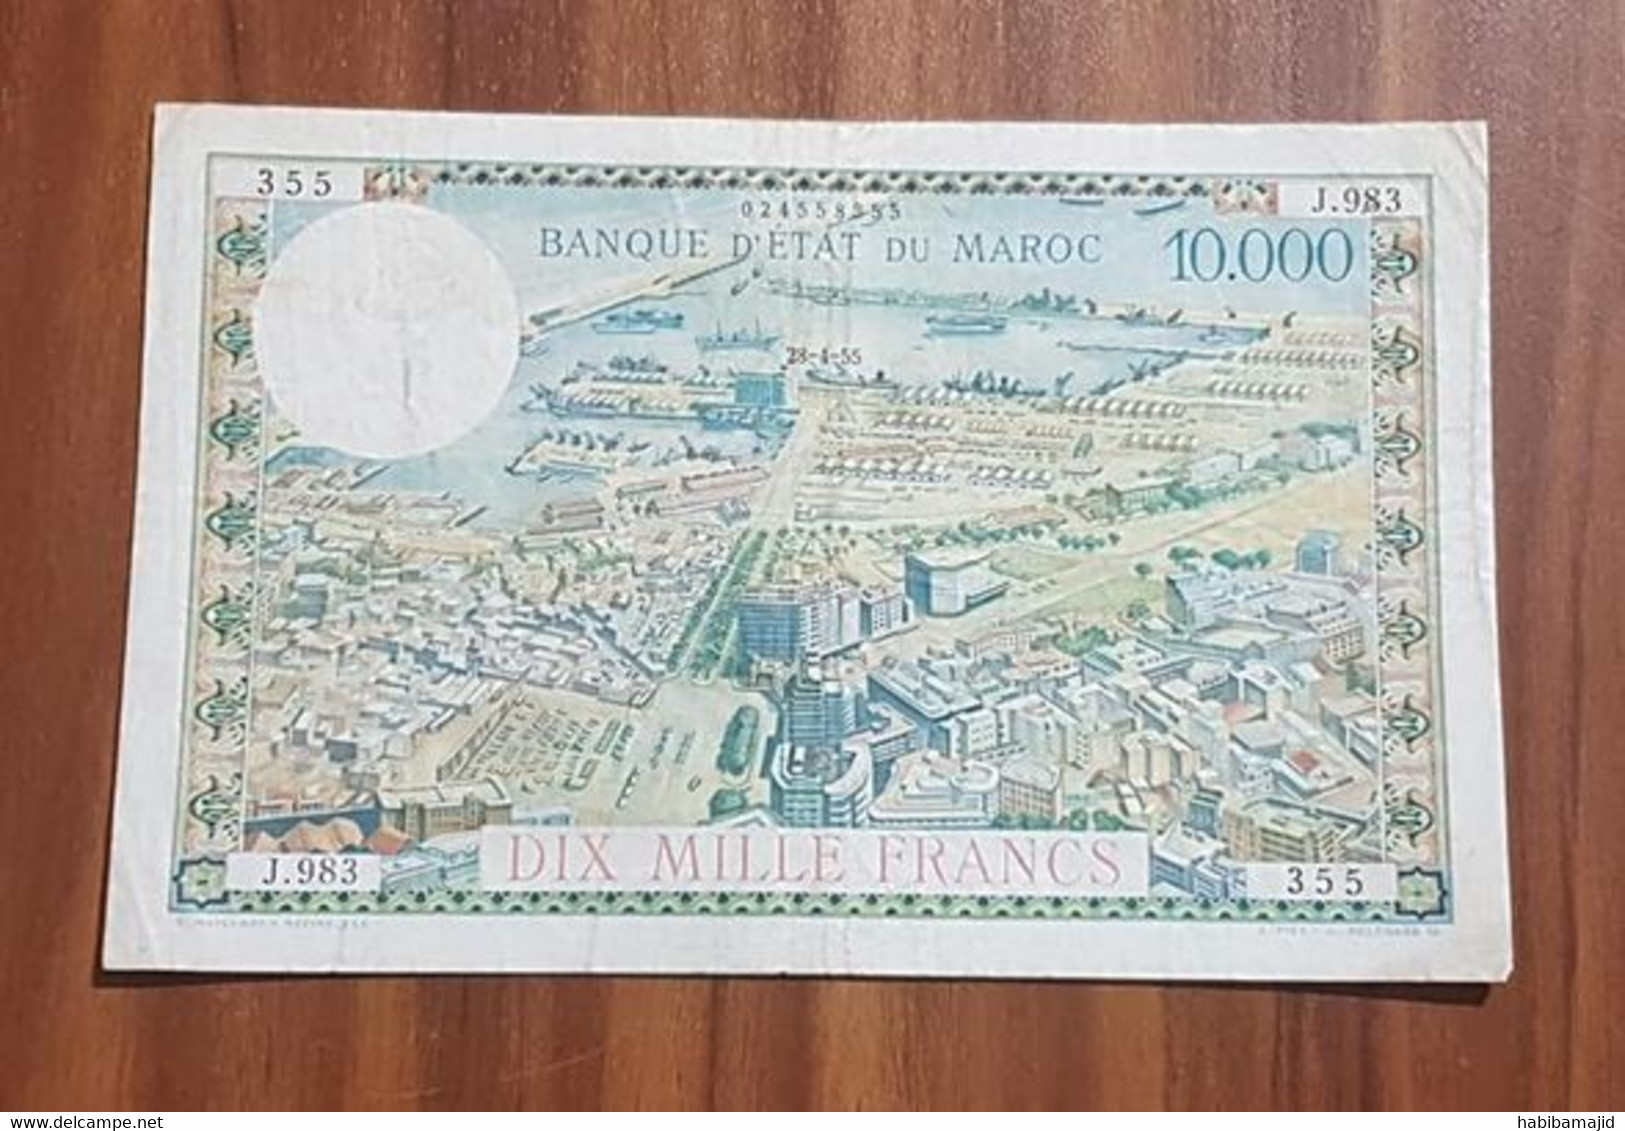 MAROC : Billet De 100 Dirhams Sur 10000 Francs 1955 - P.52 / Alph.J.983 N°355 - Marokko